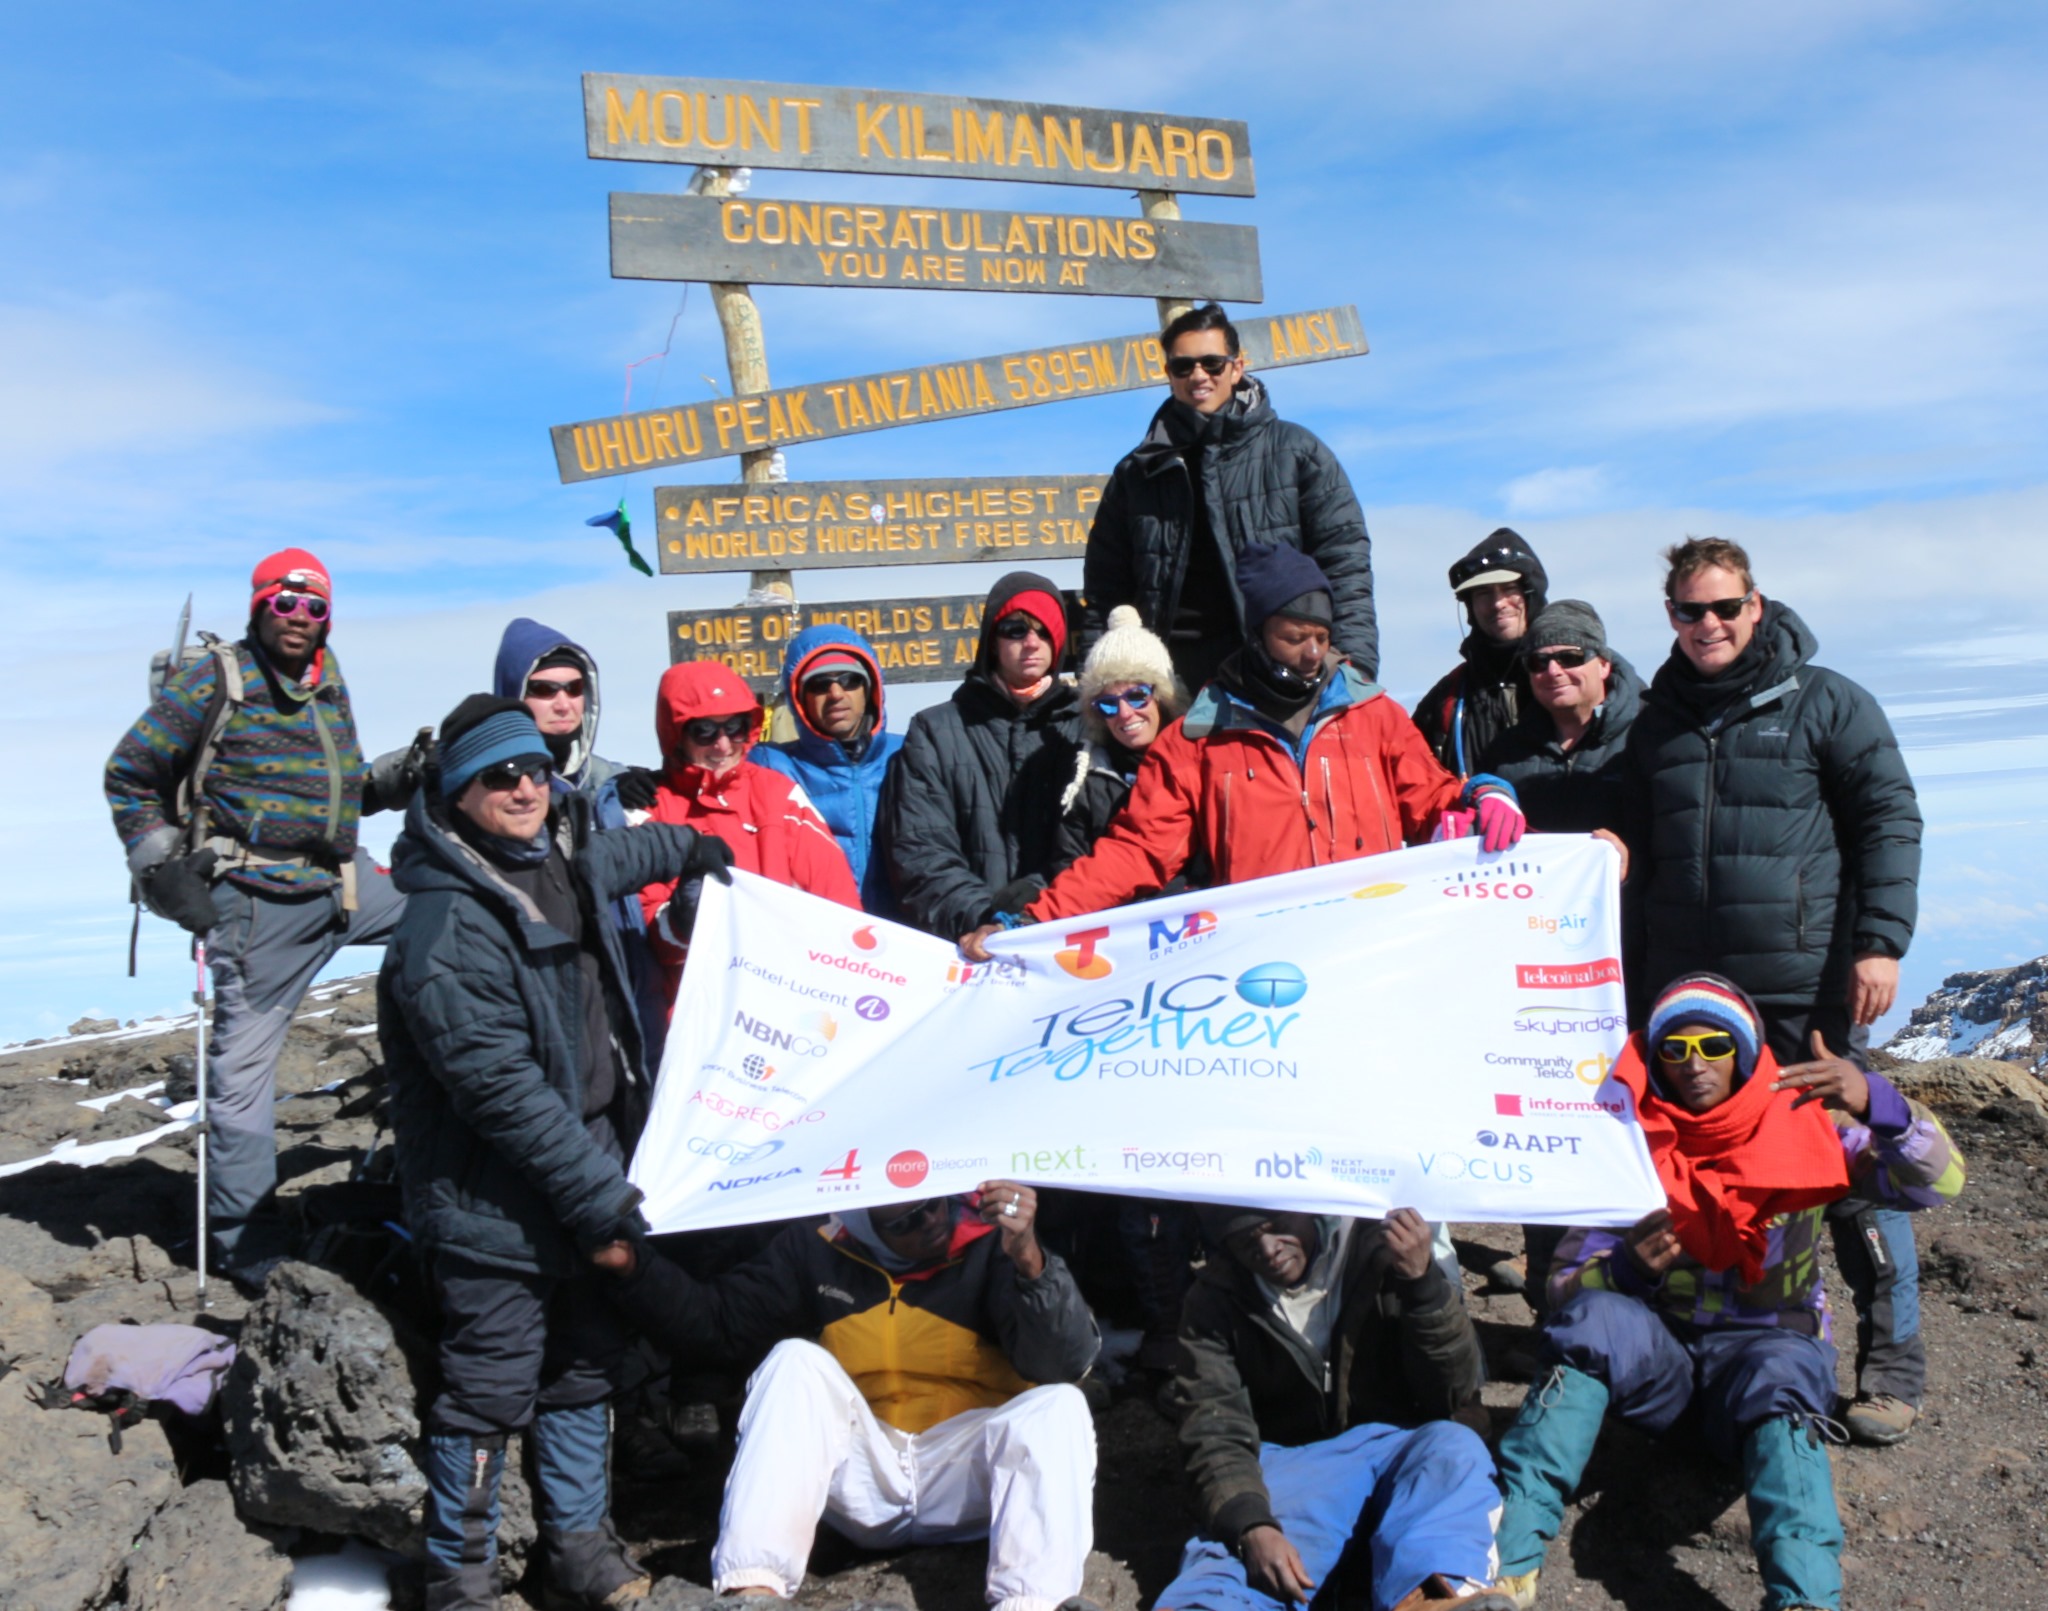 Kilimanjaro 2015 - Telco Together Foundation Team Photo